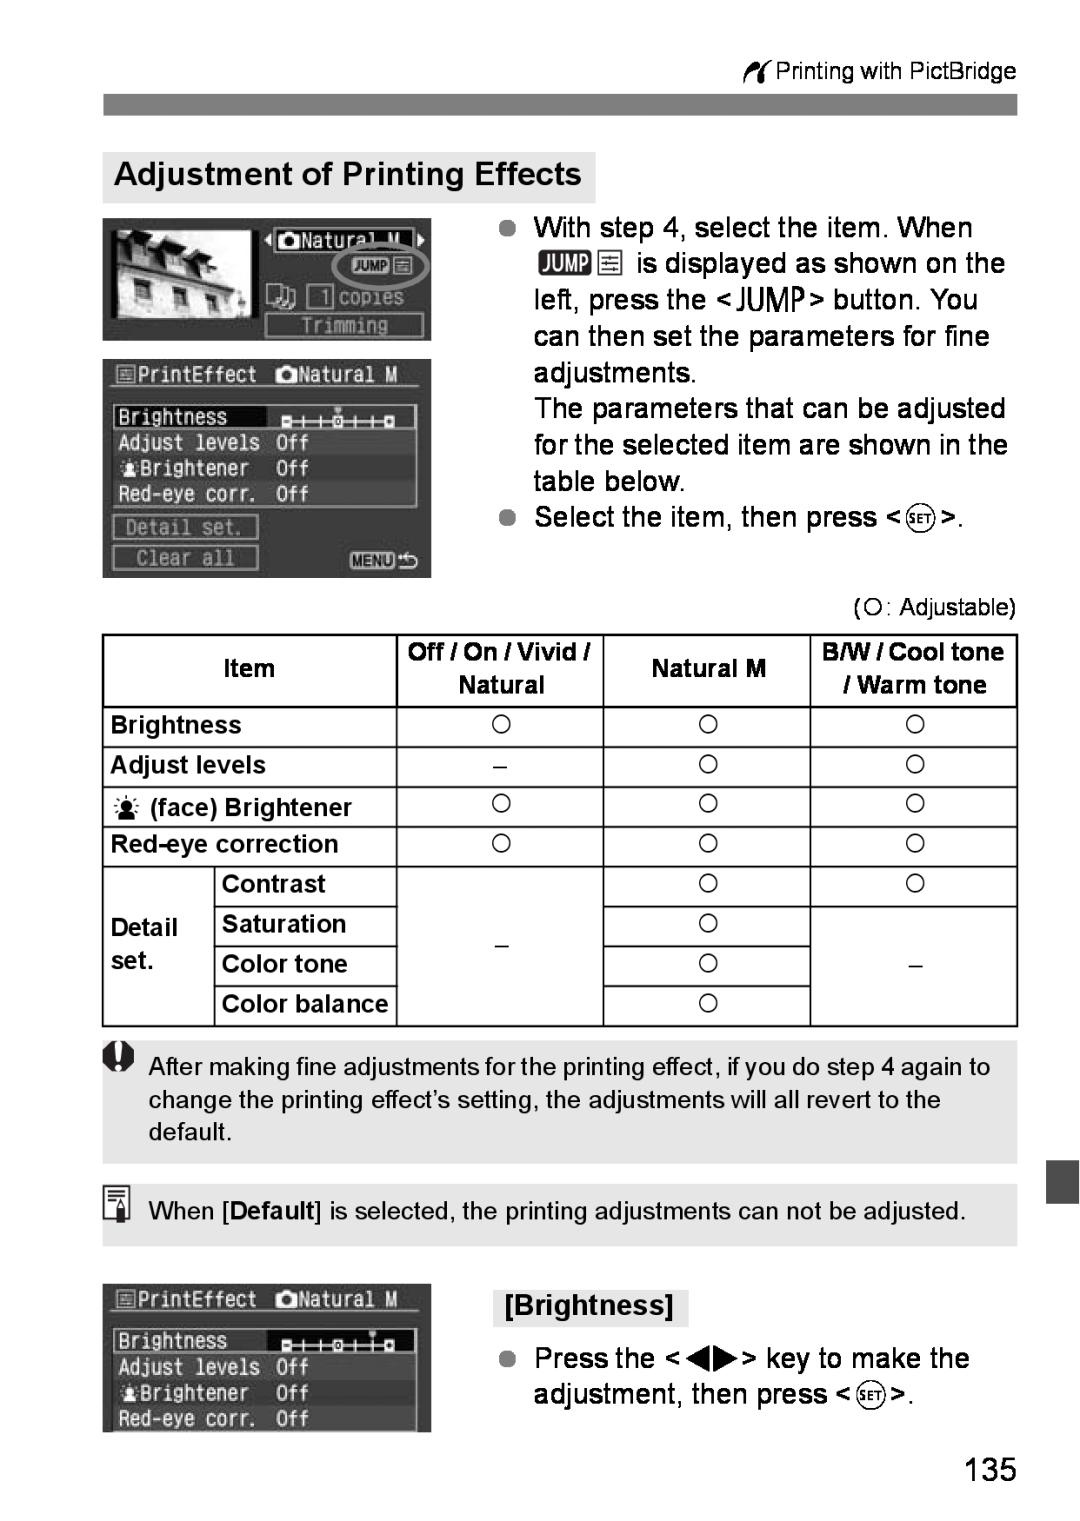 Canon EOS DIGITAL REBEL XTI instruction manual Adjustment of Printing Effects, Brightness 